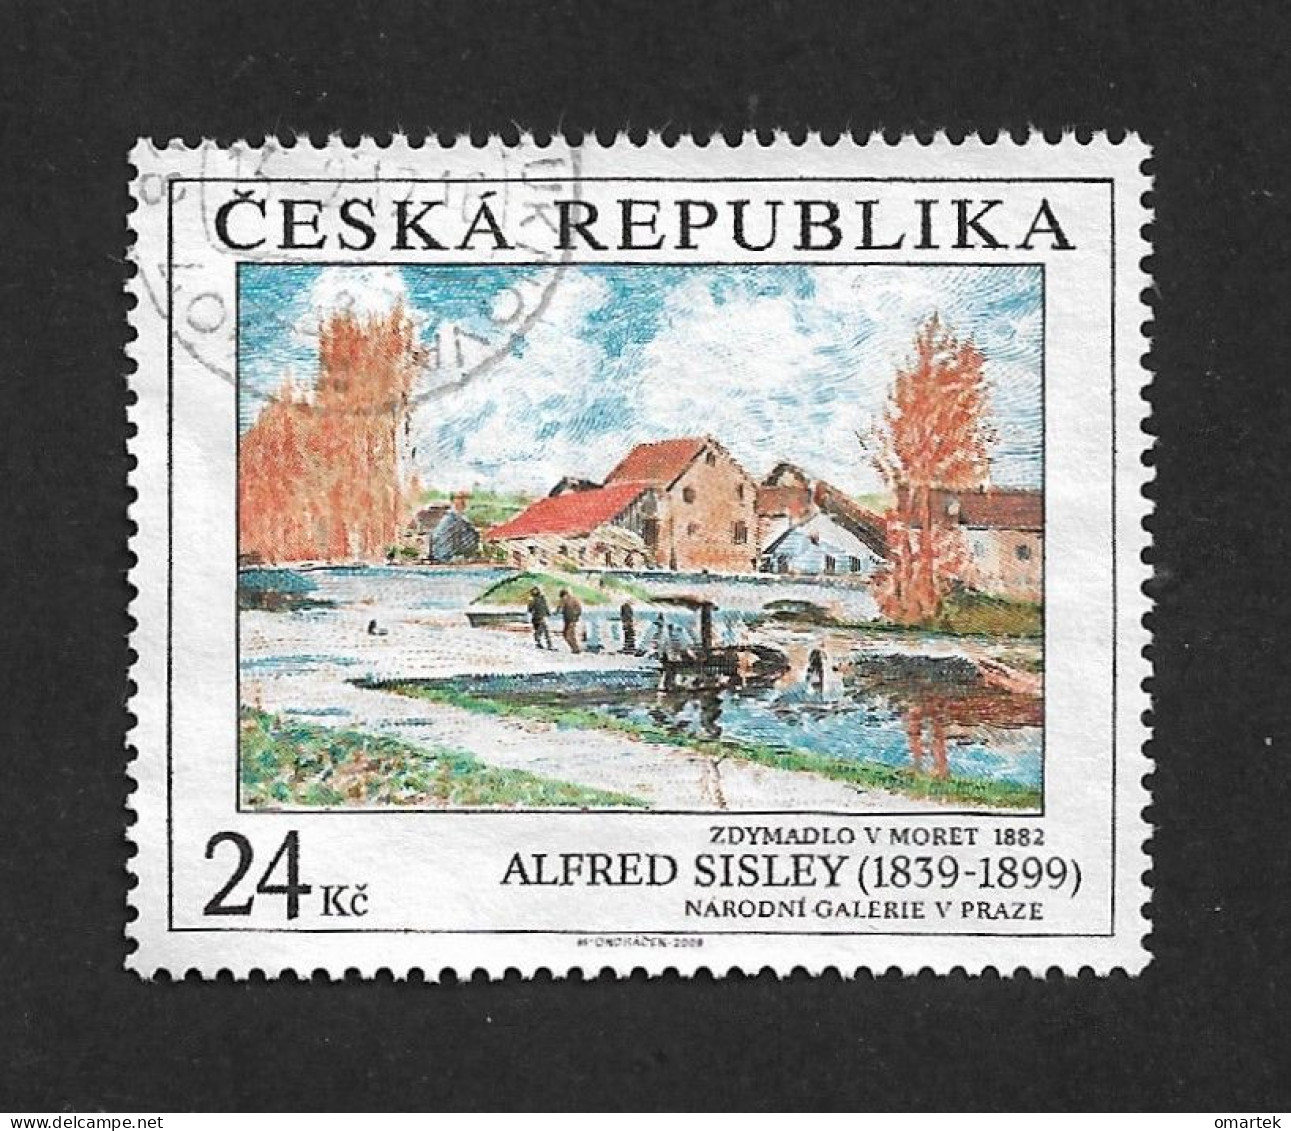 Czech Republic 2009 ⊙ Mi 614 Sc 3435 Alfred Sisley. Art Painting. Tschechische Republik. C3 - Used Stamps